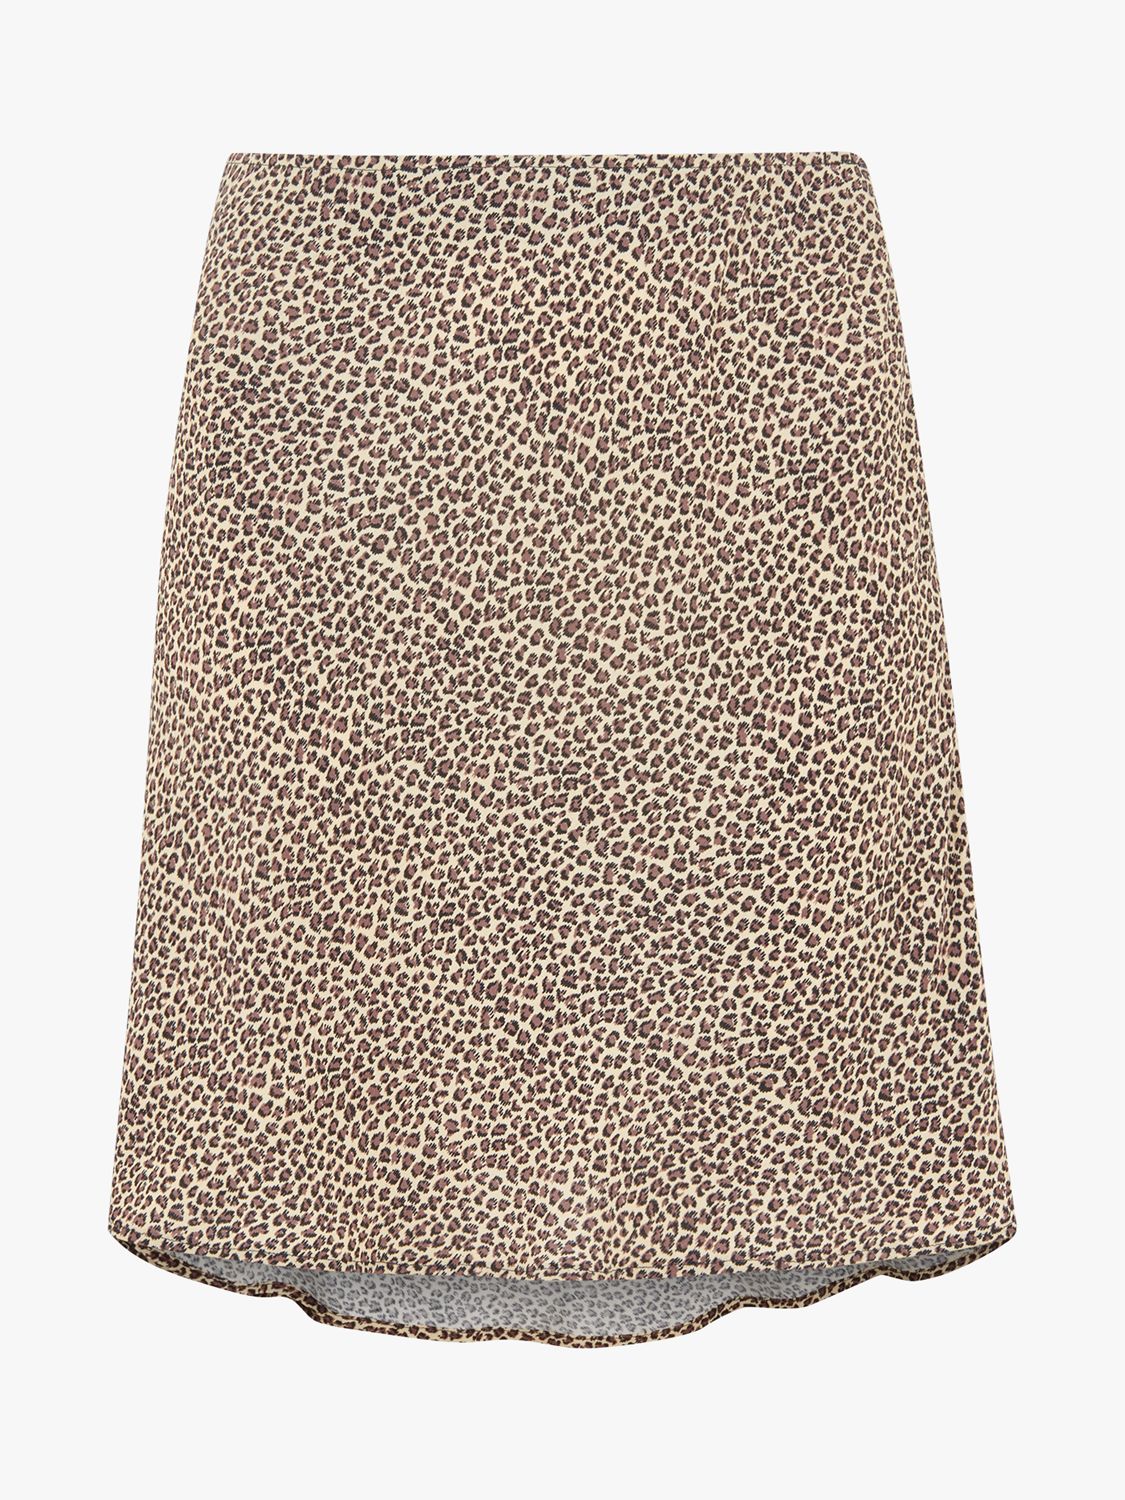 Whistles Dashed Leopard Print Mini Skirt, Brown at John Lewis & Partners